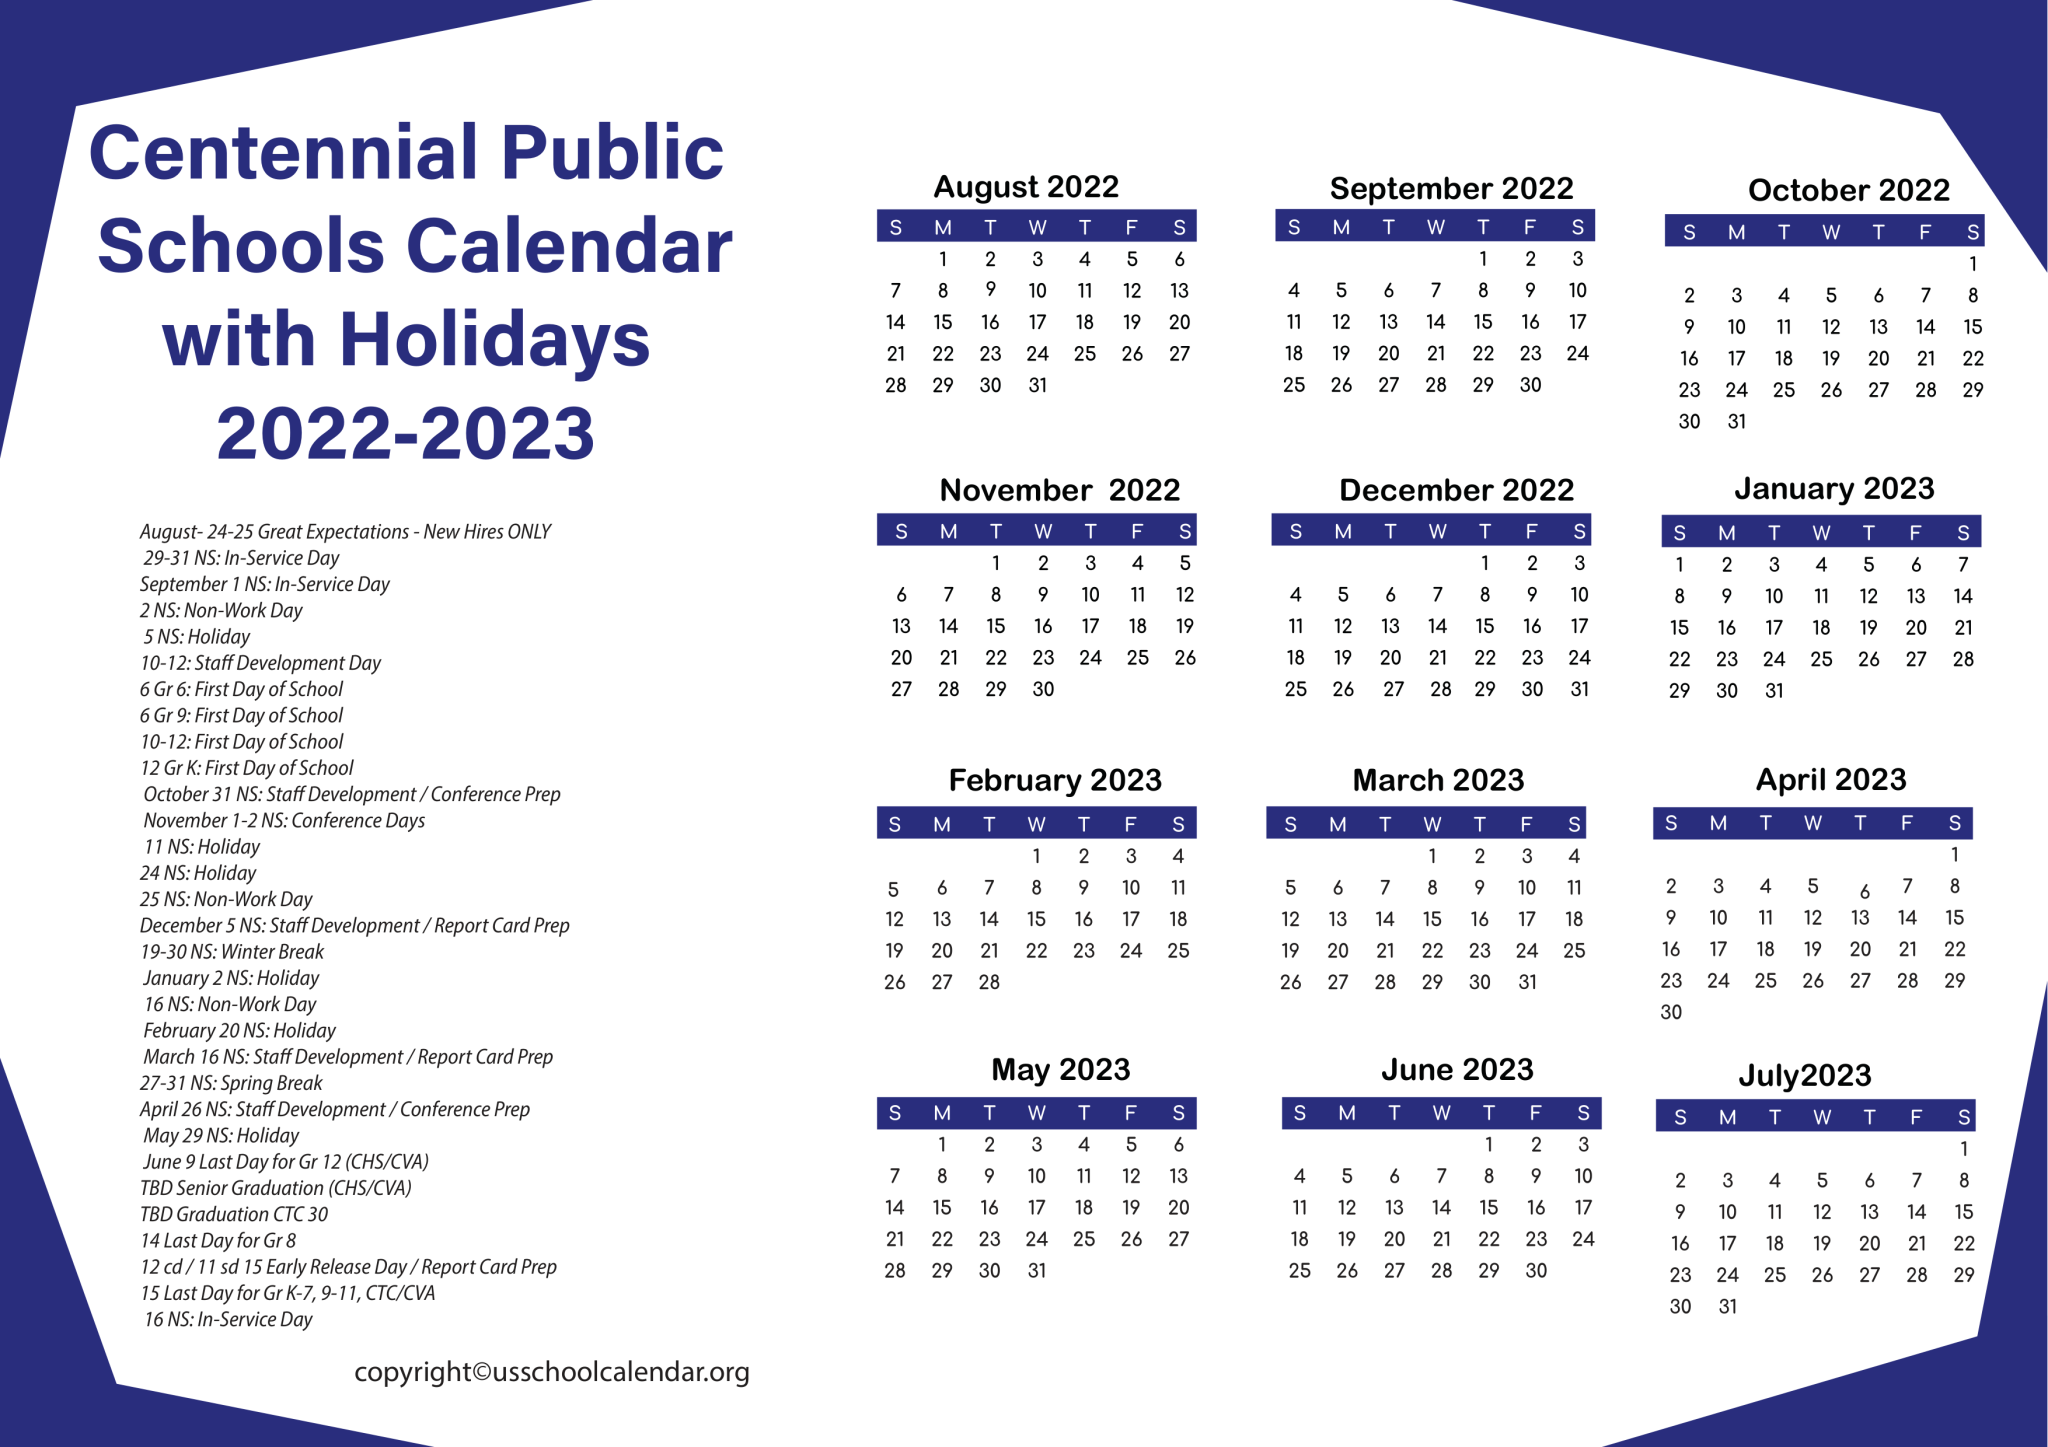 Centennial Public Schools Calendar with Holidays 2023